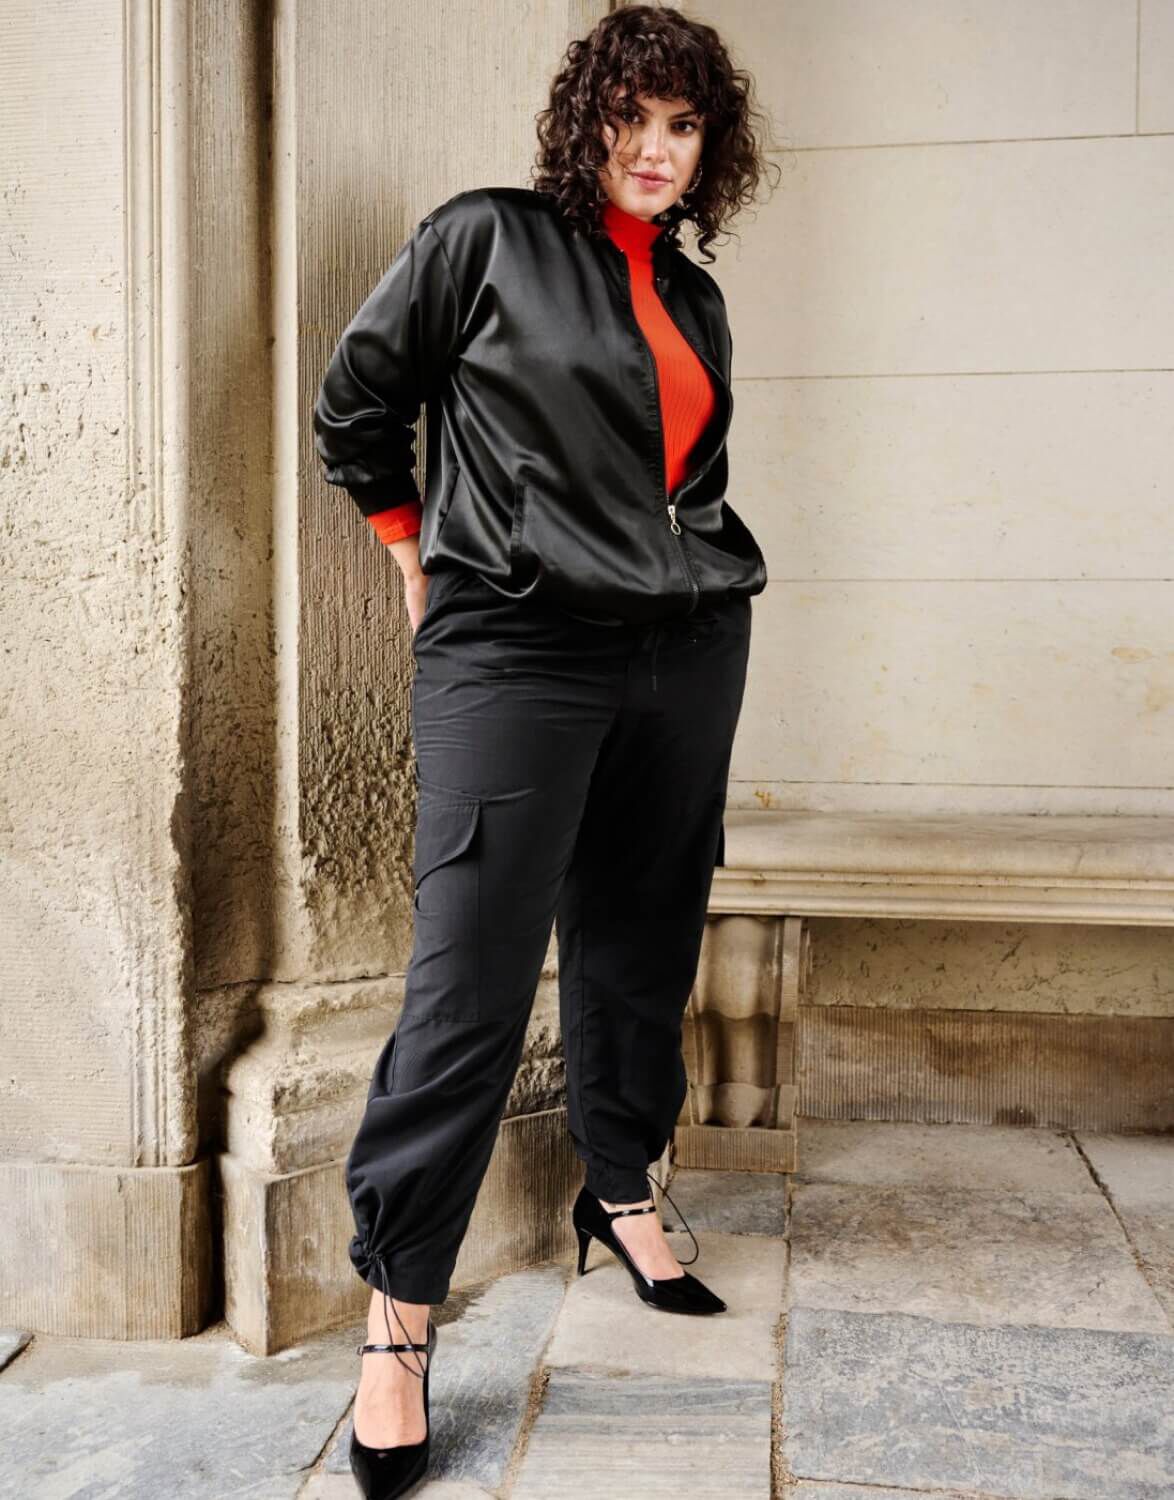 UNSHOU Womens Plus Size Jacket,Solid Casual Lace Long Sleeve Zip Up Jackets Women Short Bomber Coat Casual Outwear 